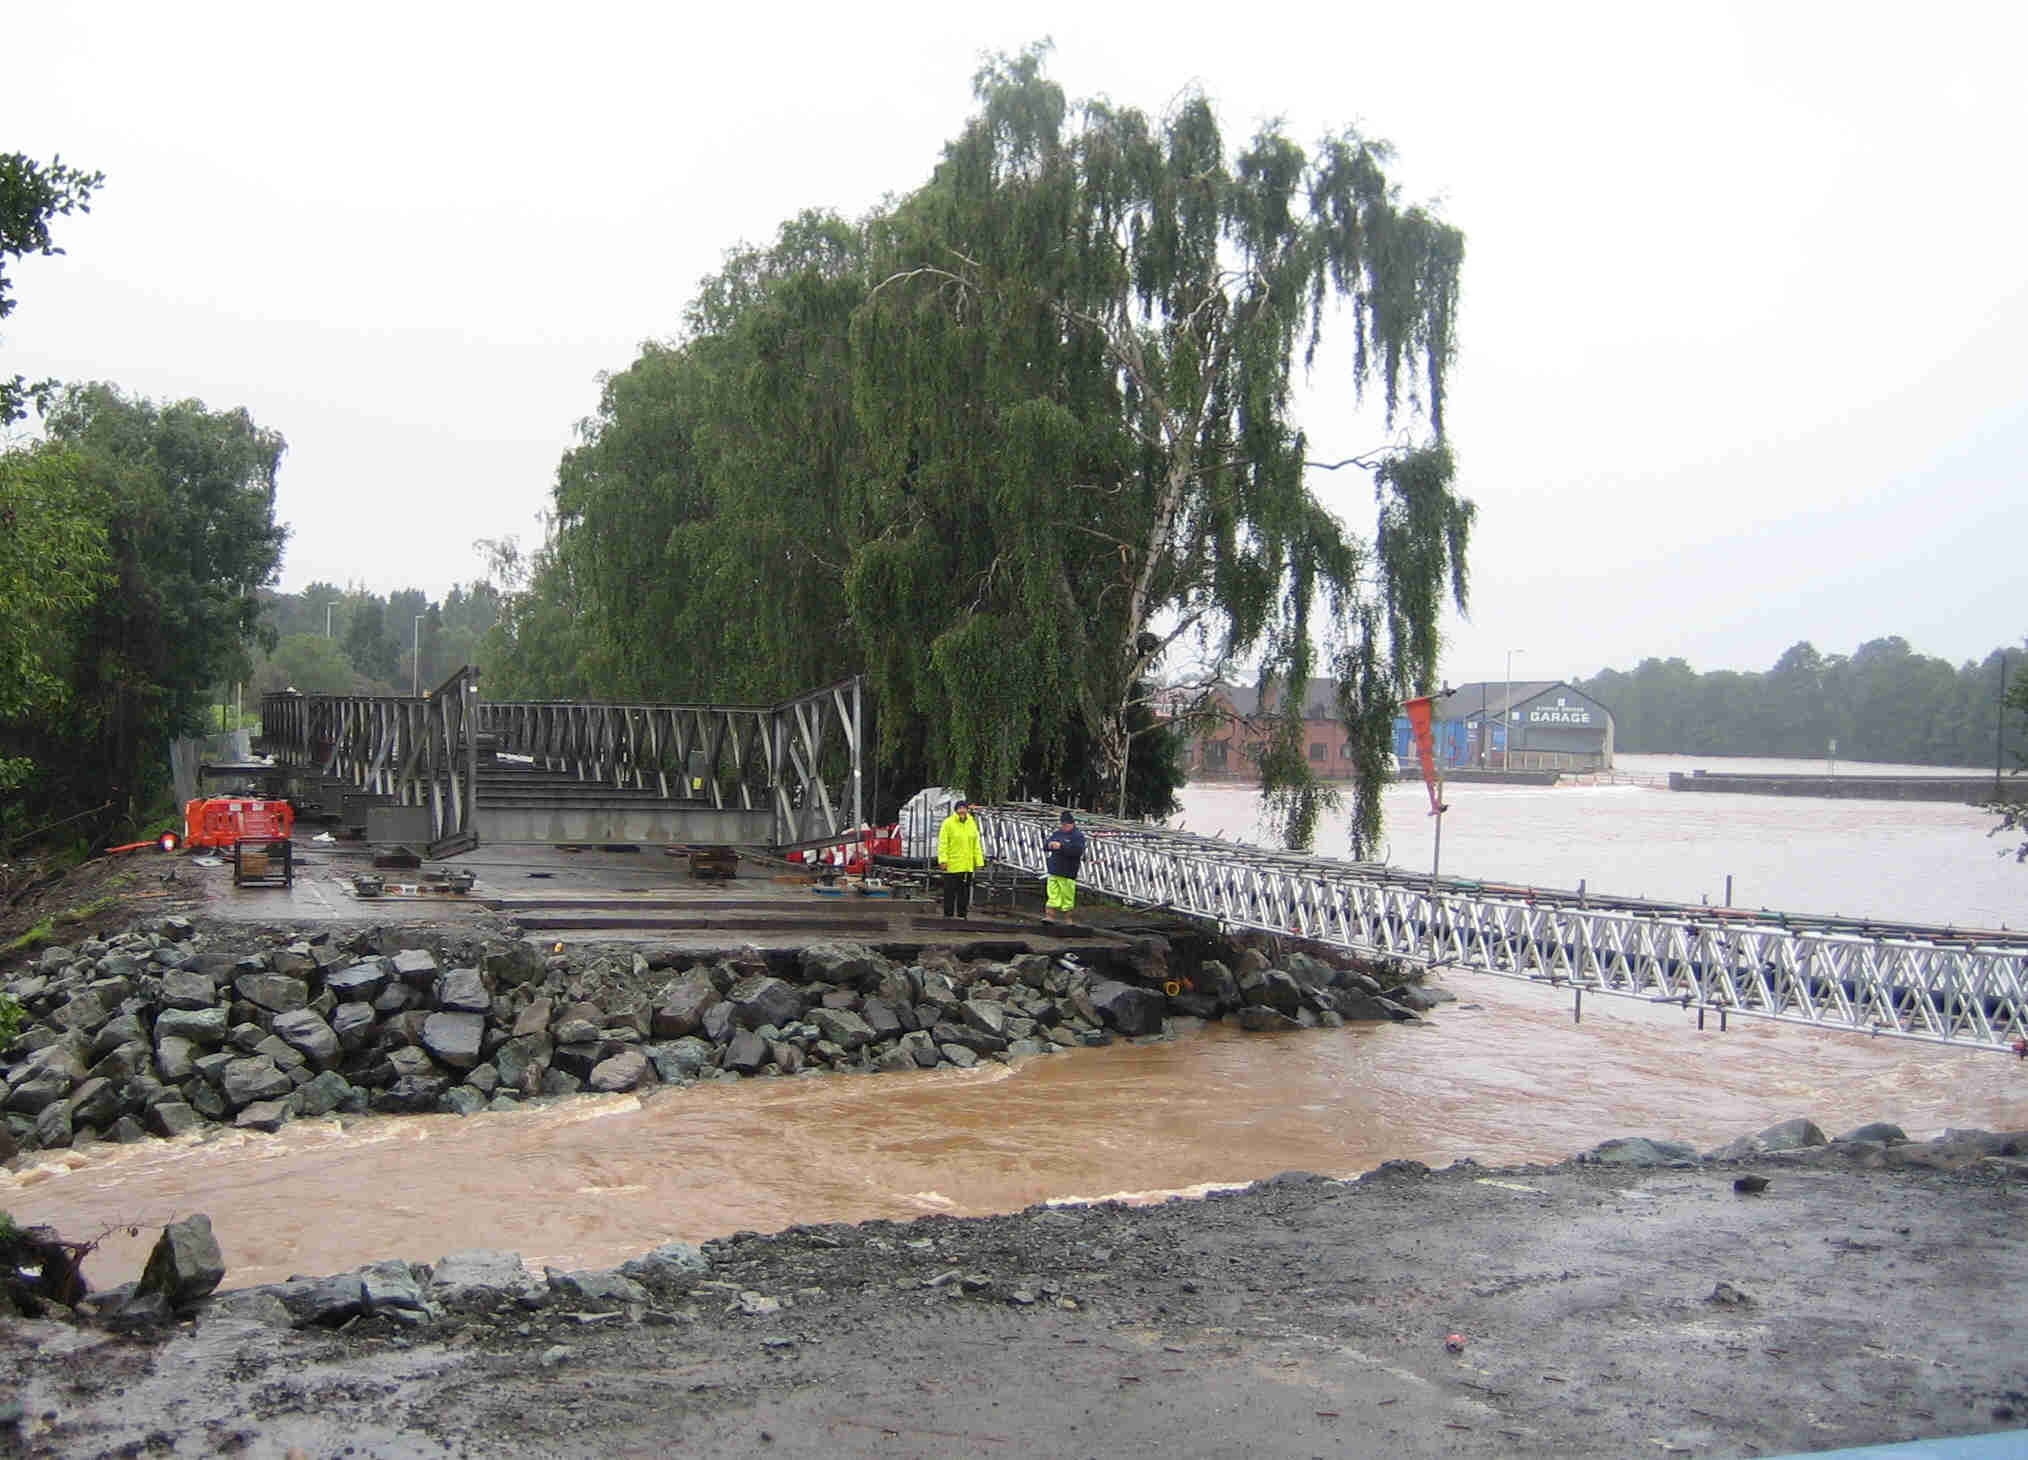 flooding in Ludlow - Burway bridge collapse June 2007